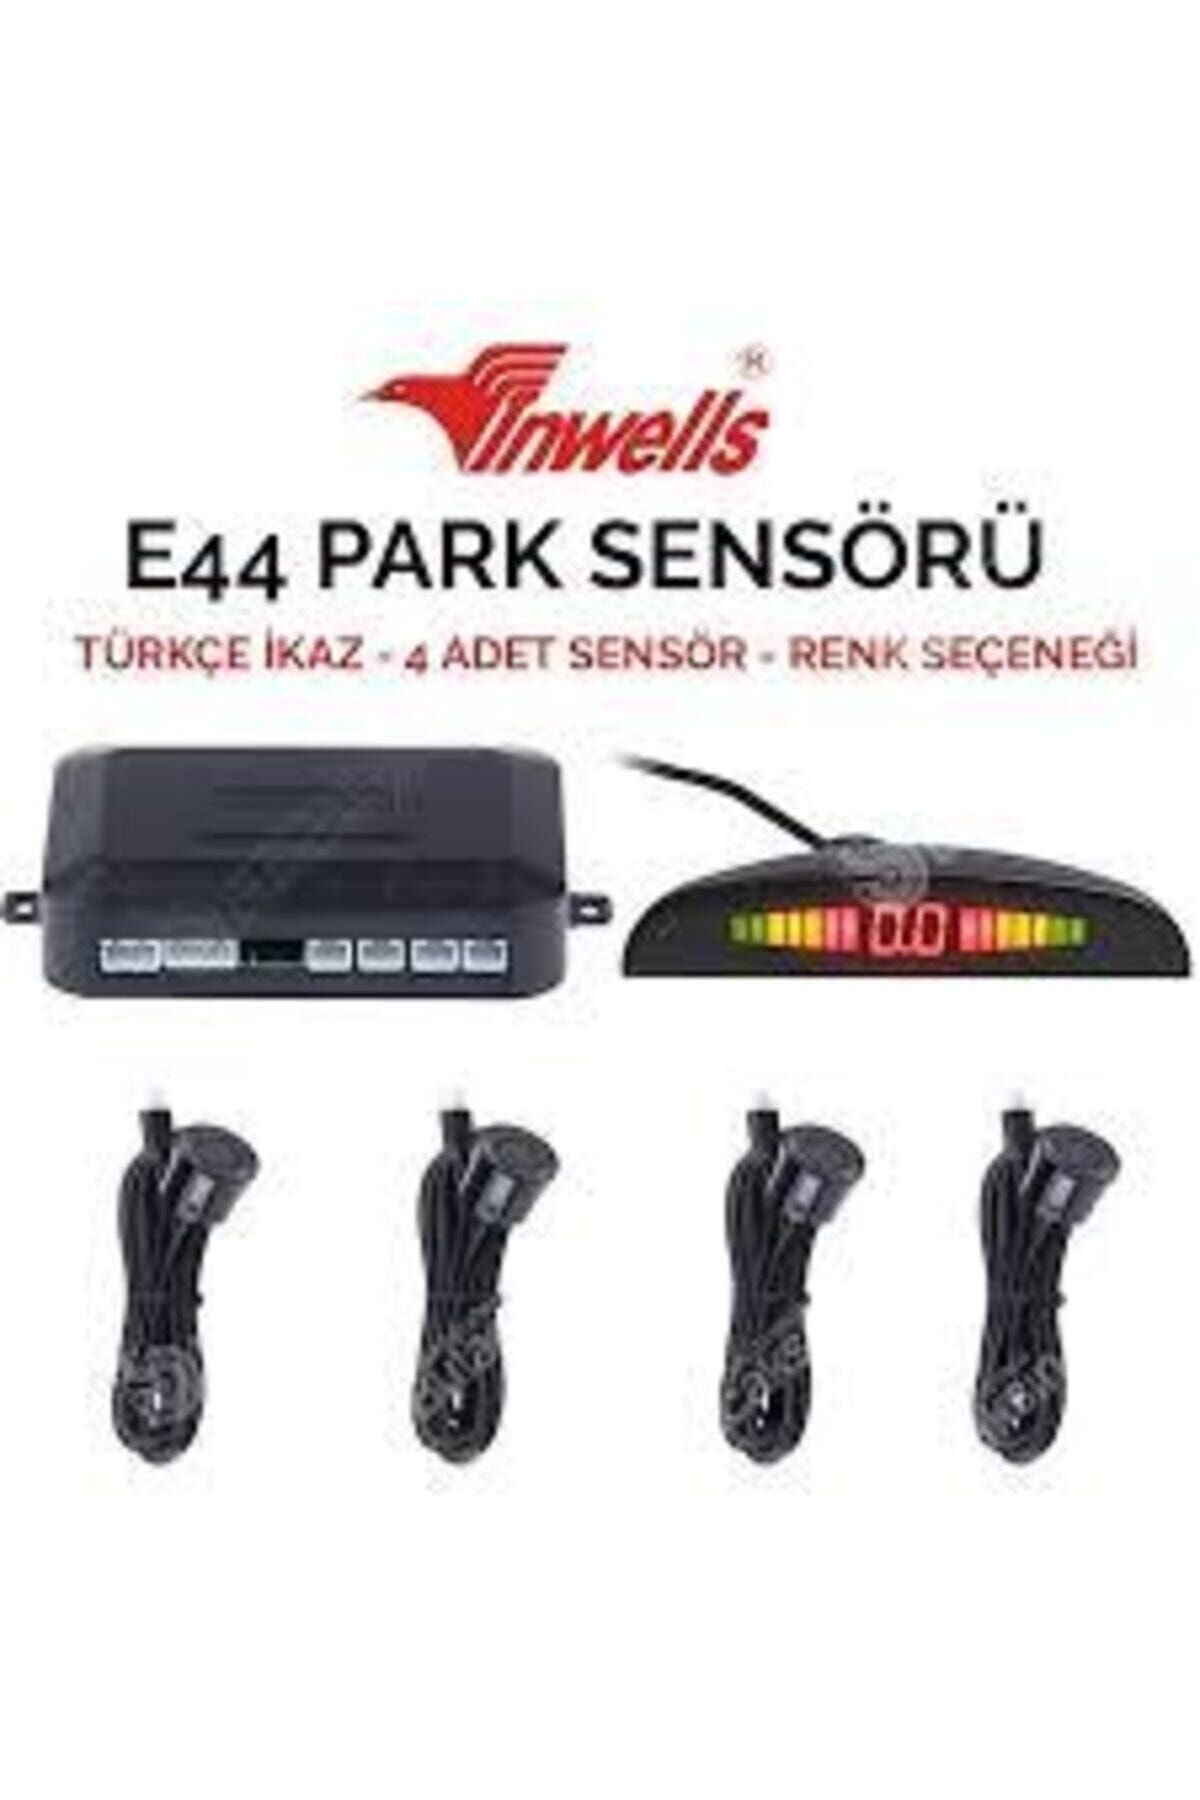 Inwells Inwels Park Sensoru E44 4 Sensorlu Sıyah Turkce Konusan